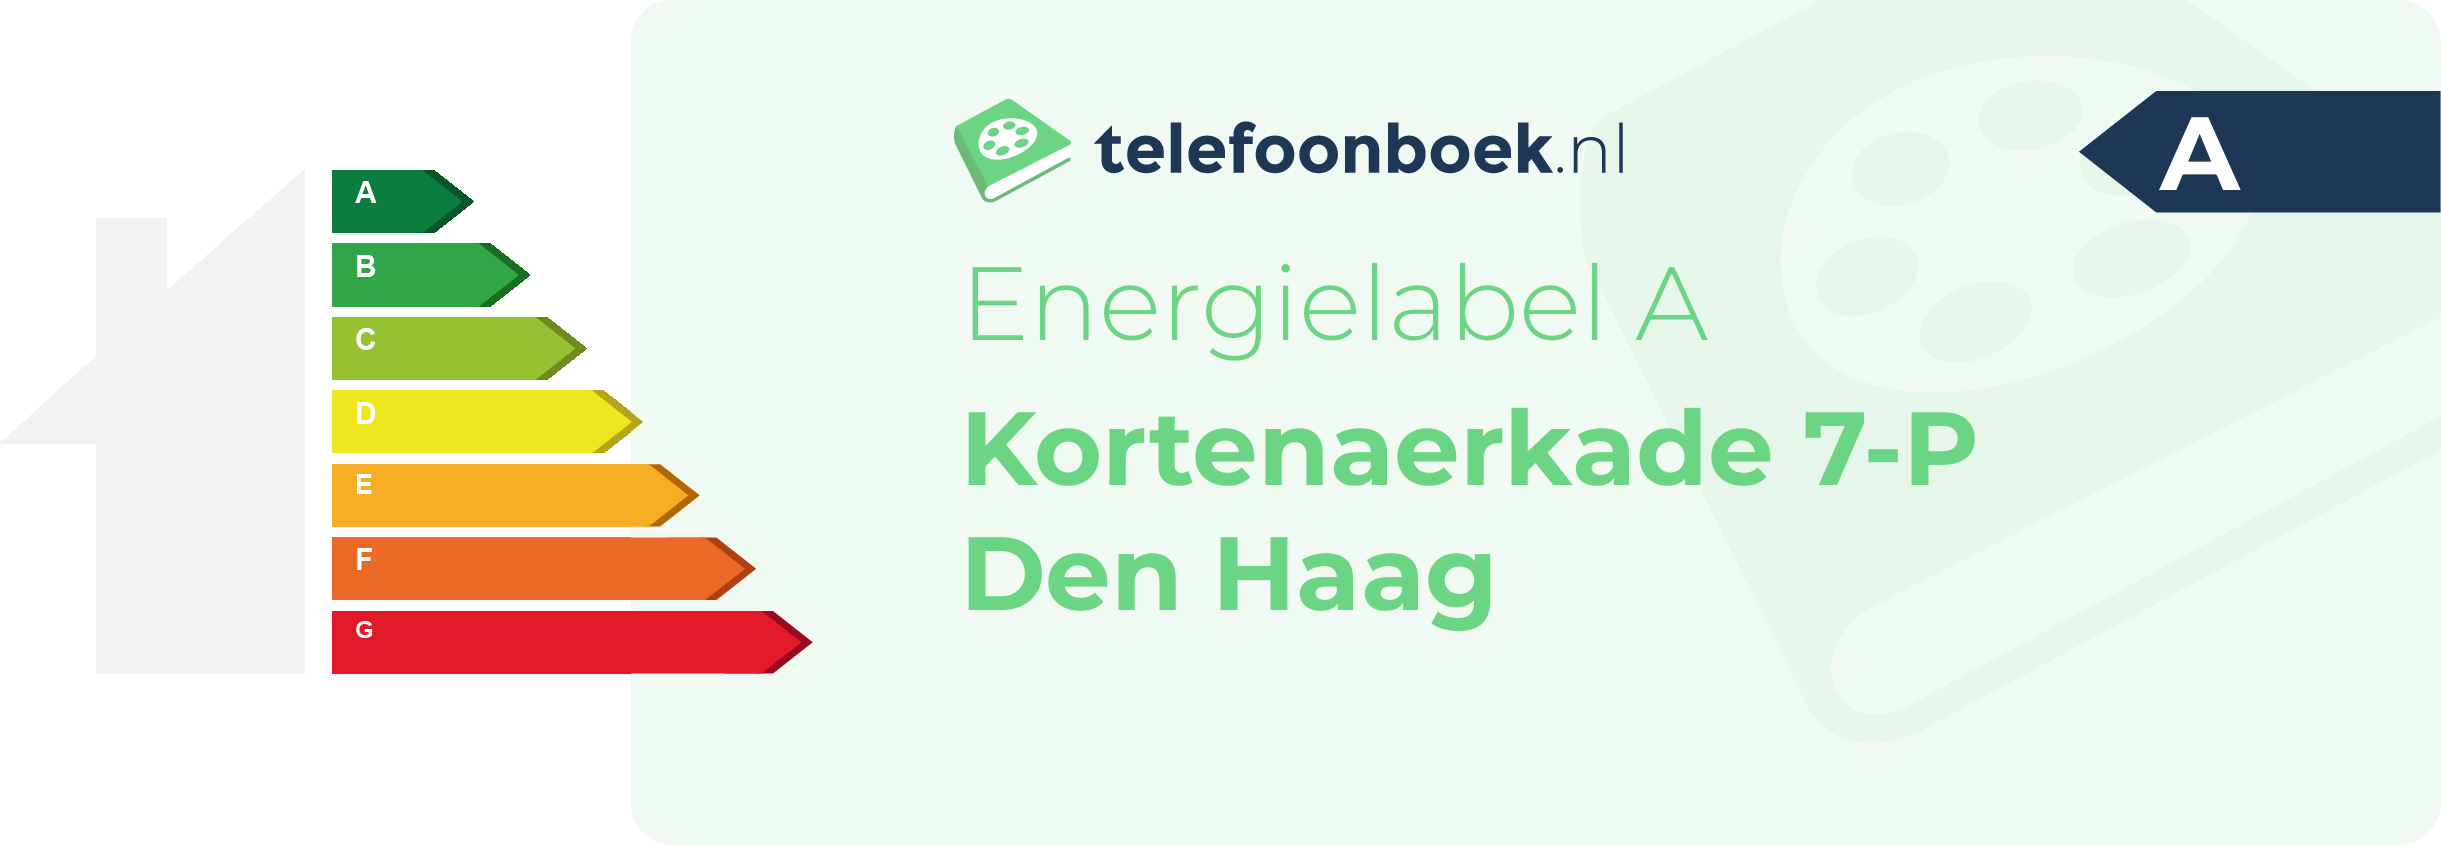 Energielabel Kortenaerkade 7-P Den Haag